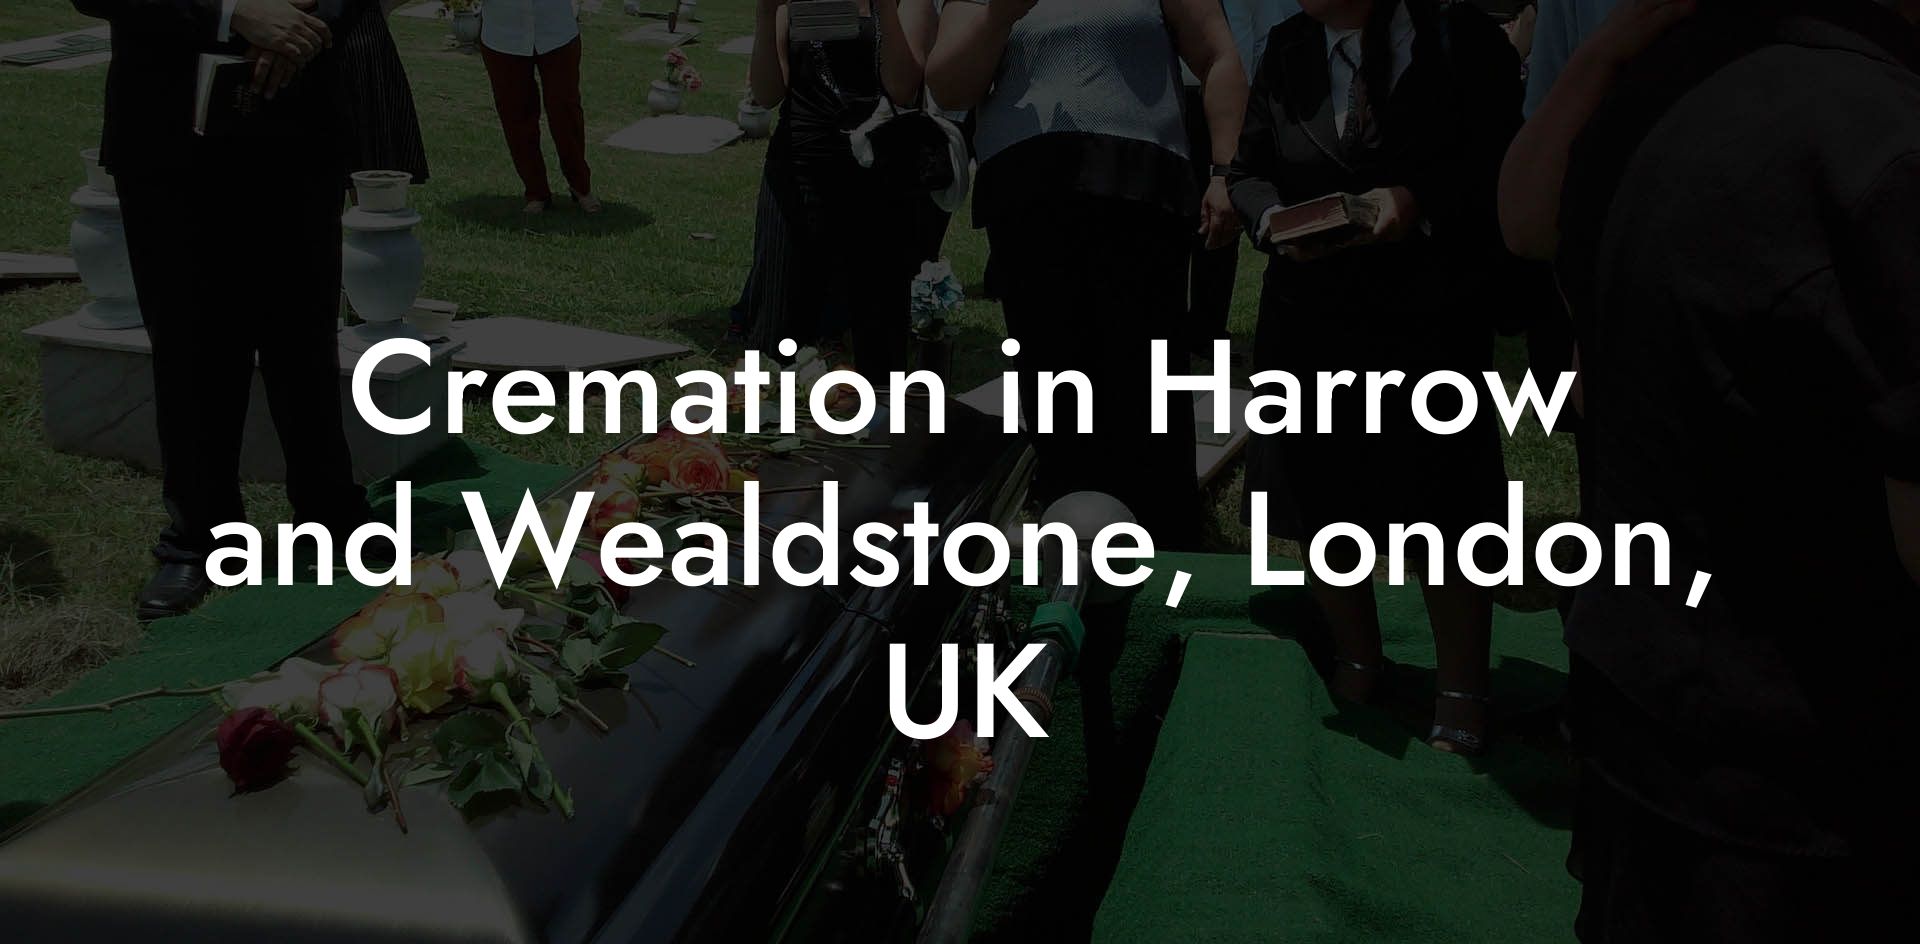 Cremation in Harrow and Wealdstone, London, UK